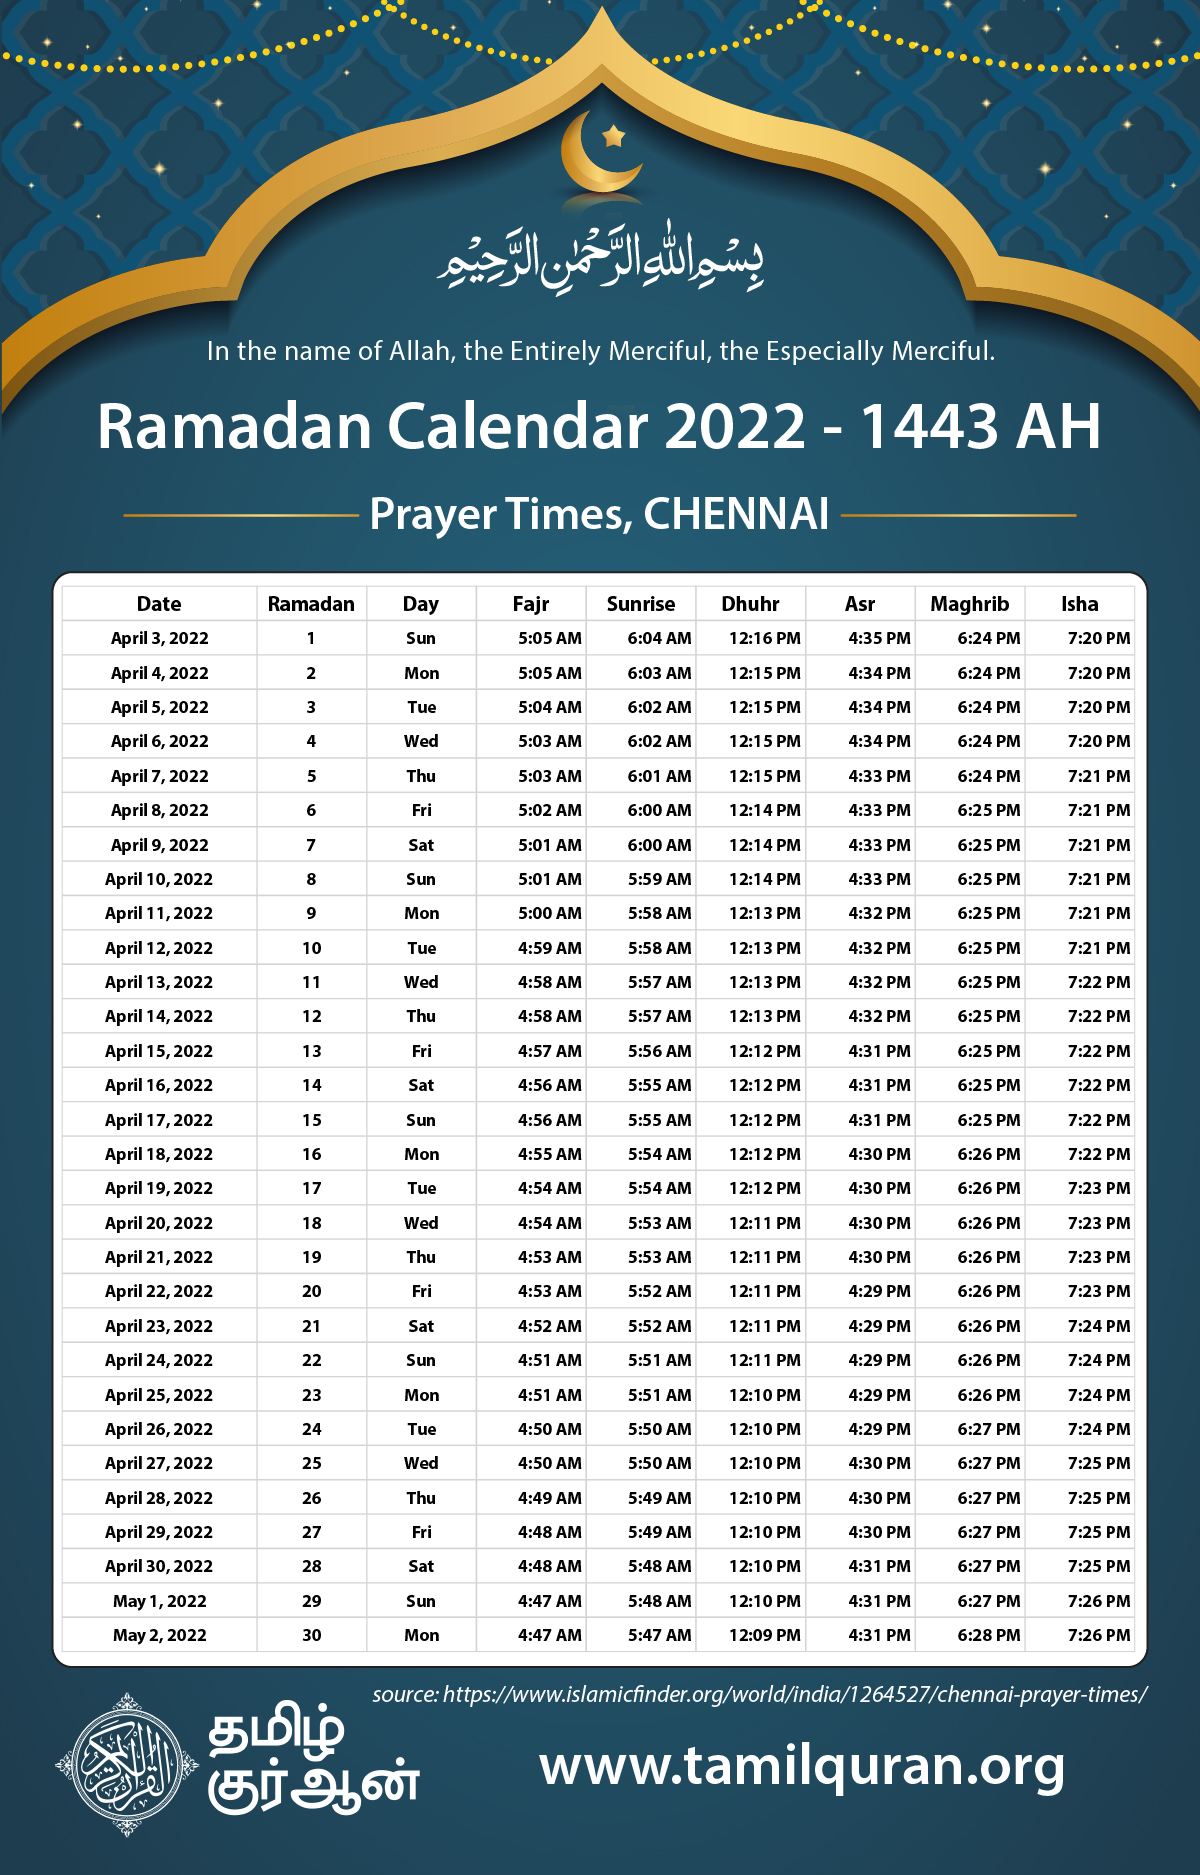 Ramadan Prayer TimeTable 2022 Chennai